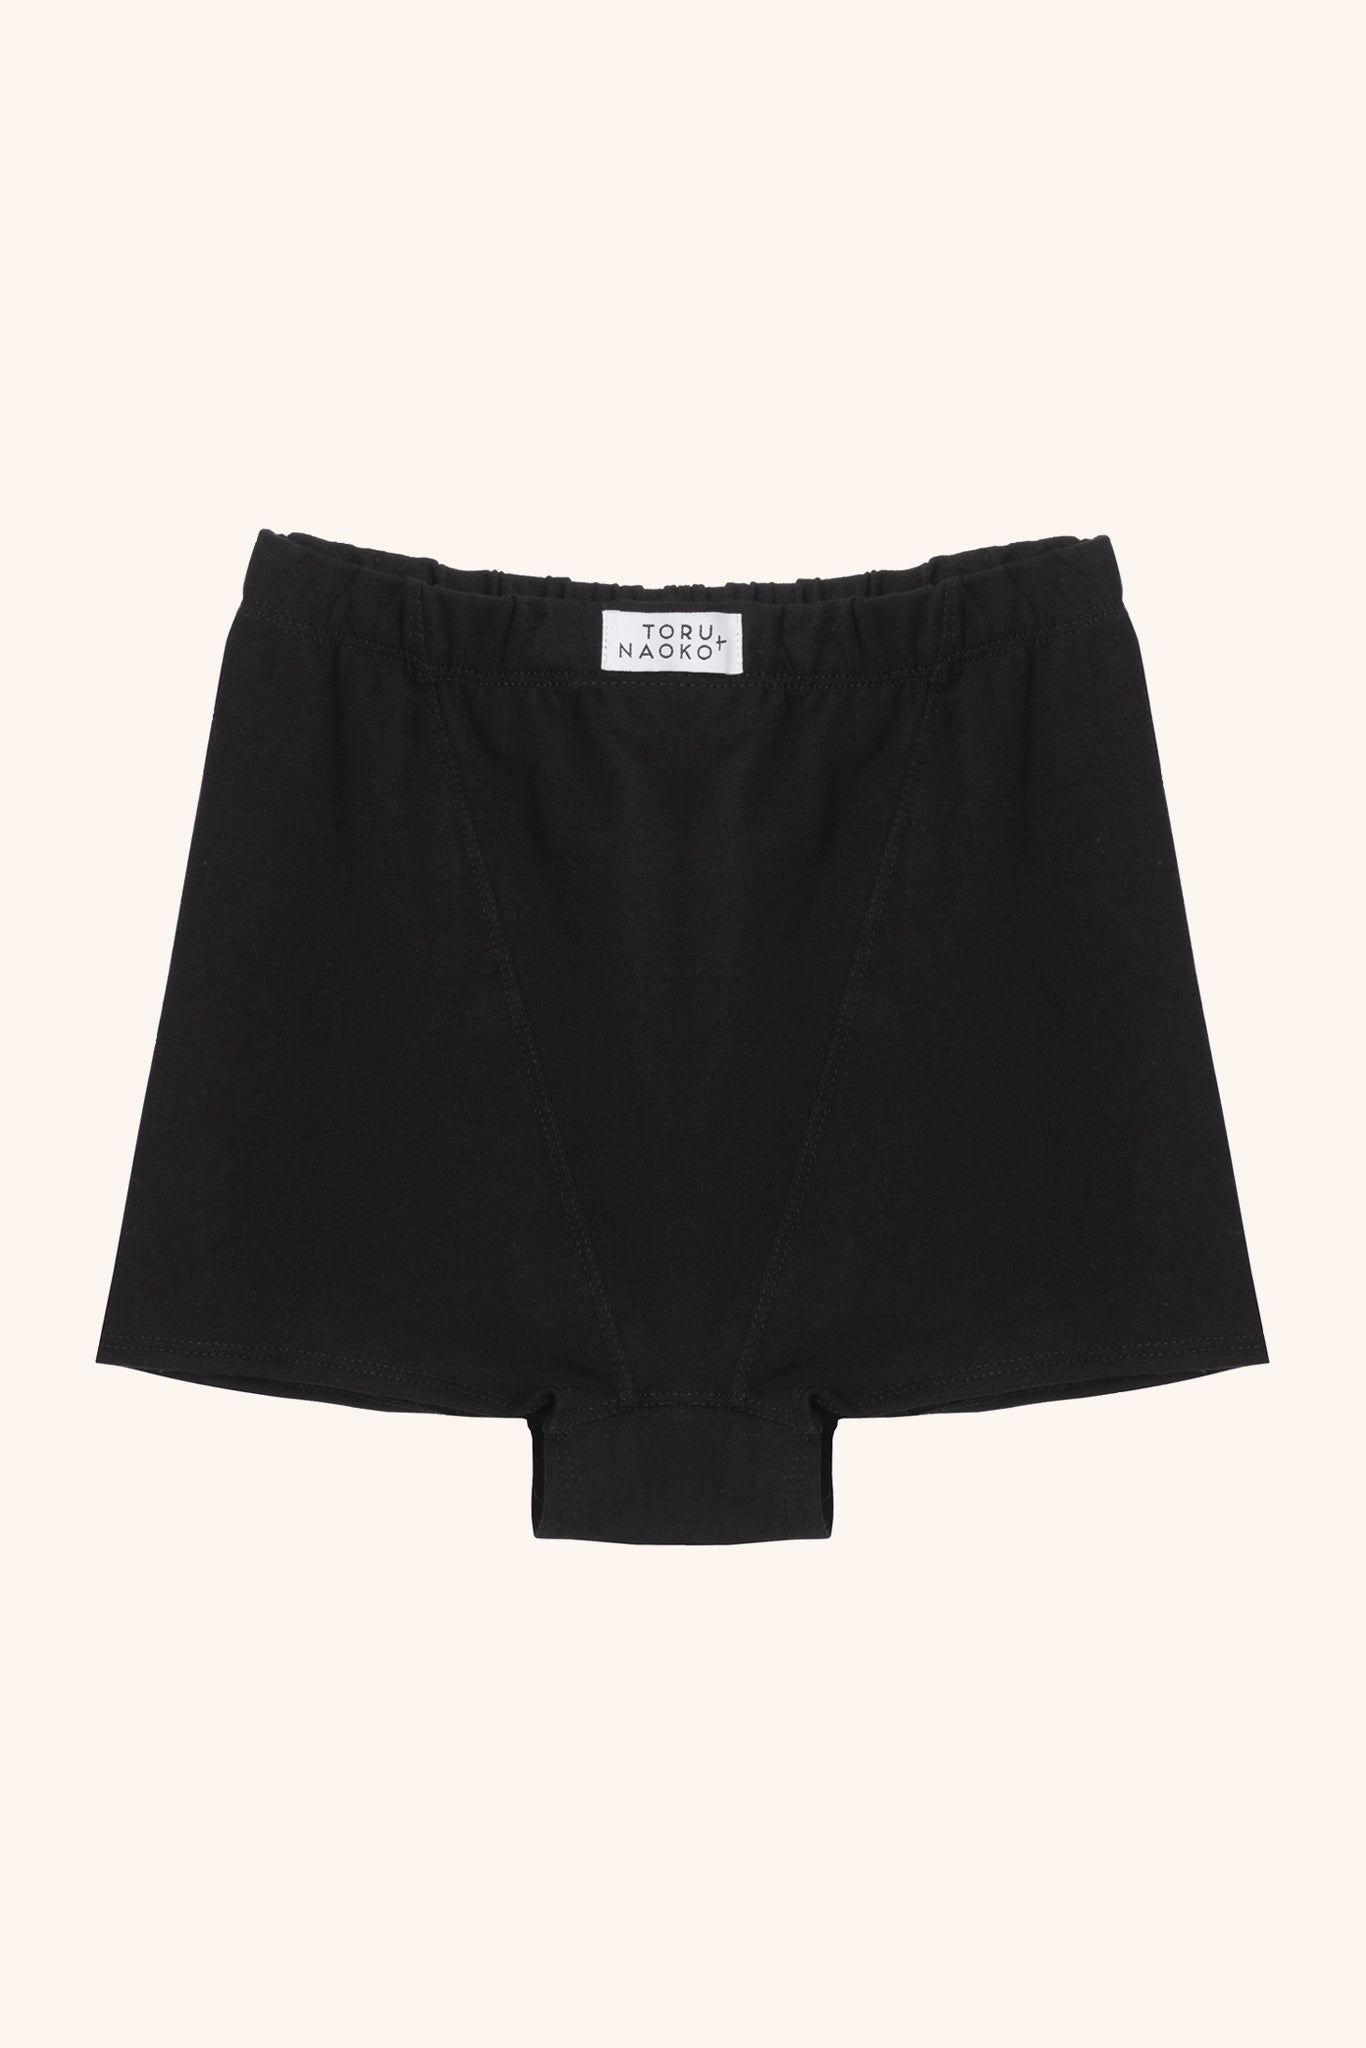 Toru & Naoko lingerie - Nico boxer shorts - black cotton